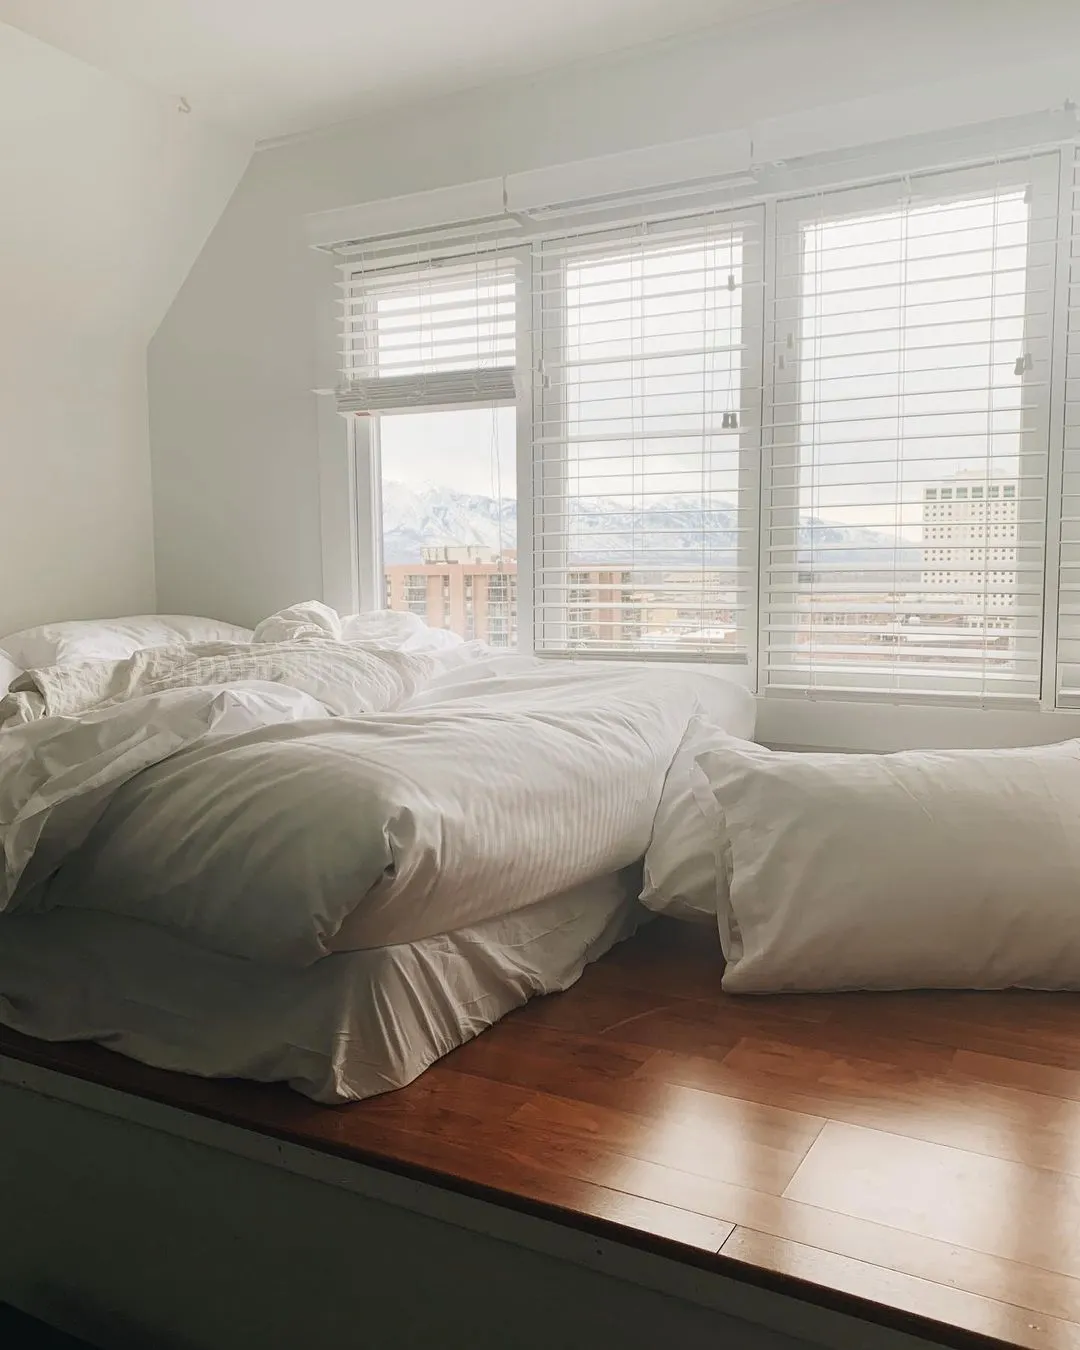 A cozy-looking bed